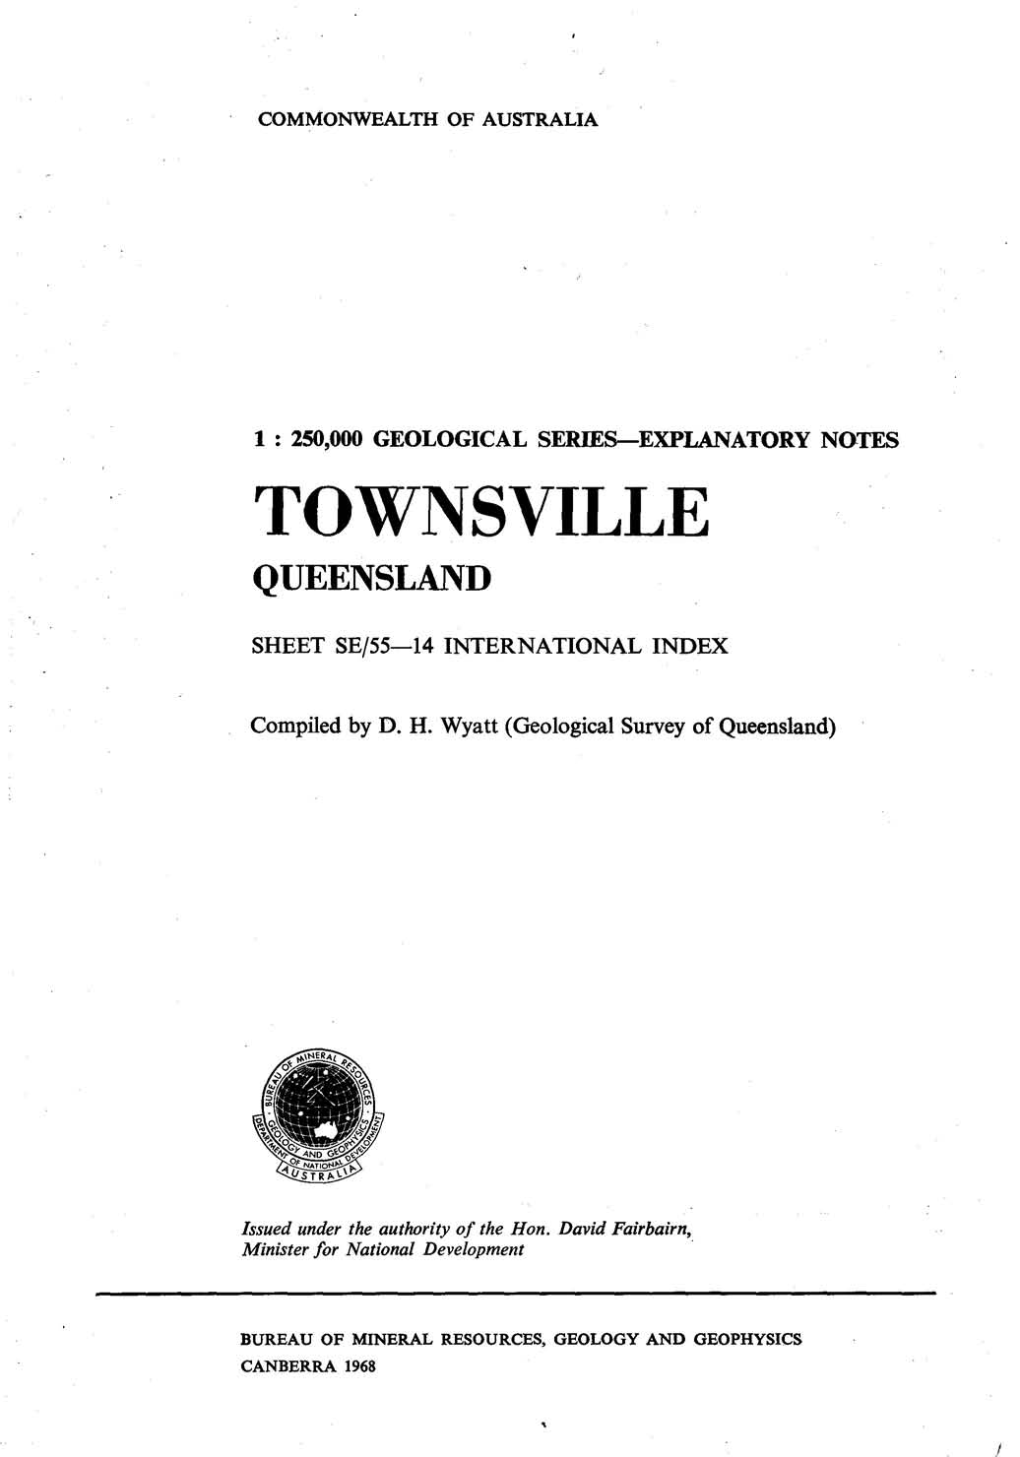 Towns Ville Queensland